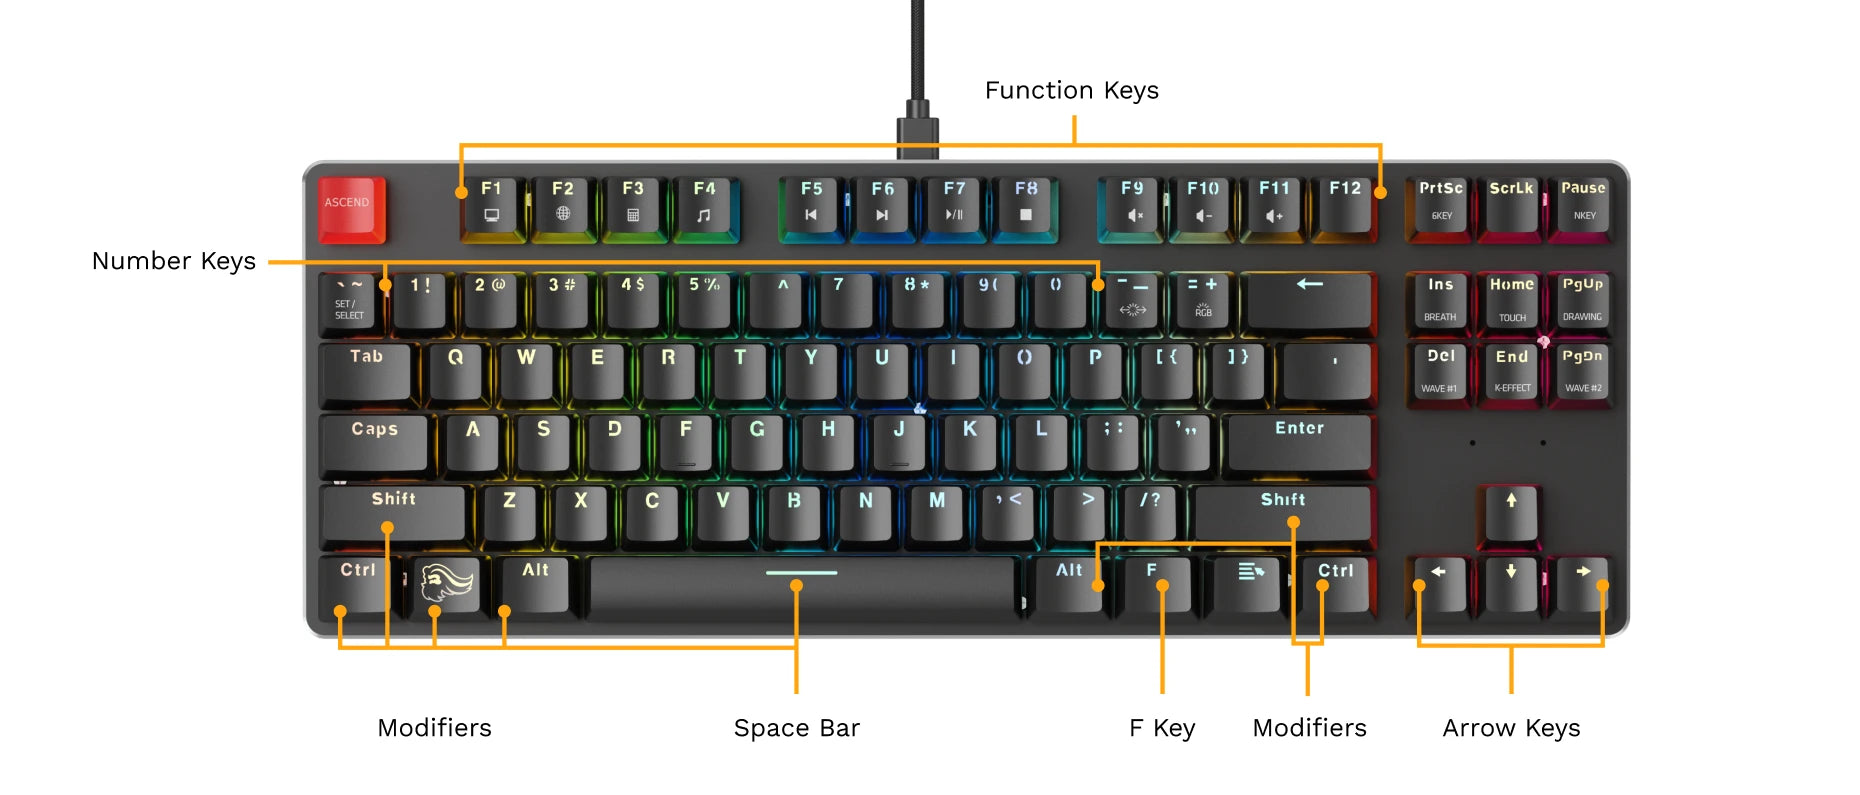 GMMK 1 TKL Keyboard keys and button layout diagram